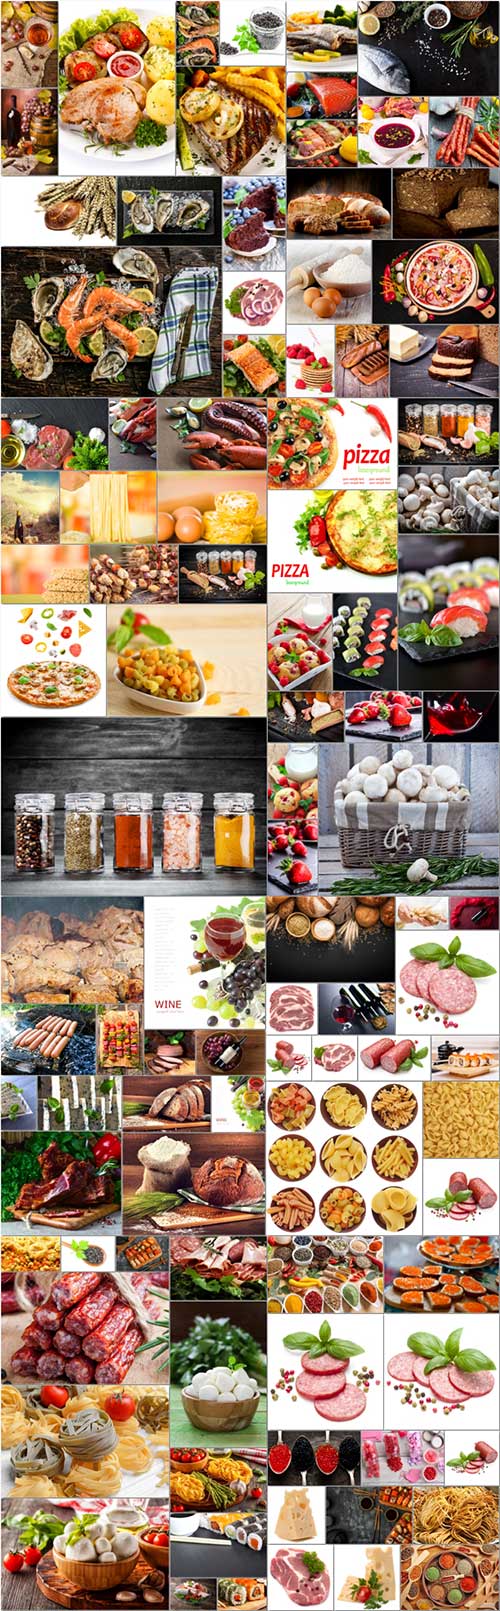 Food, meat, vegetables, fruits, fish, stock photo bundle vol 6